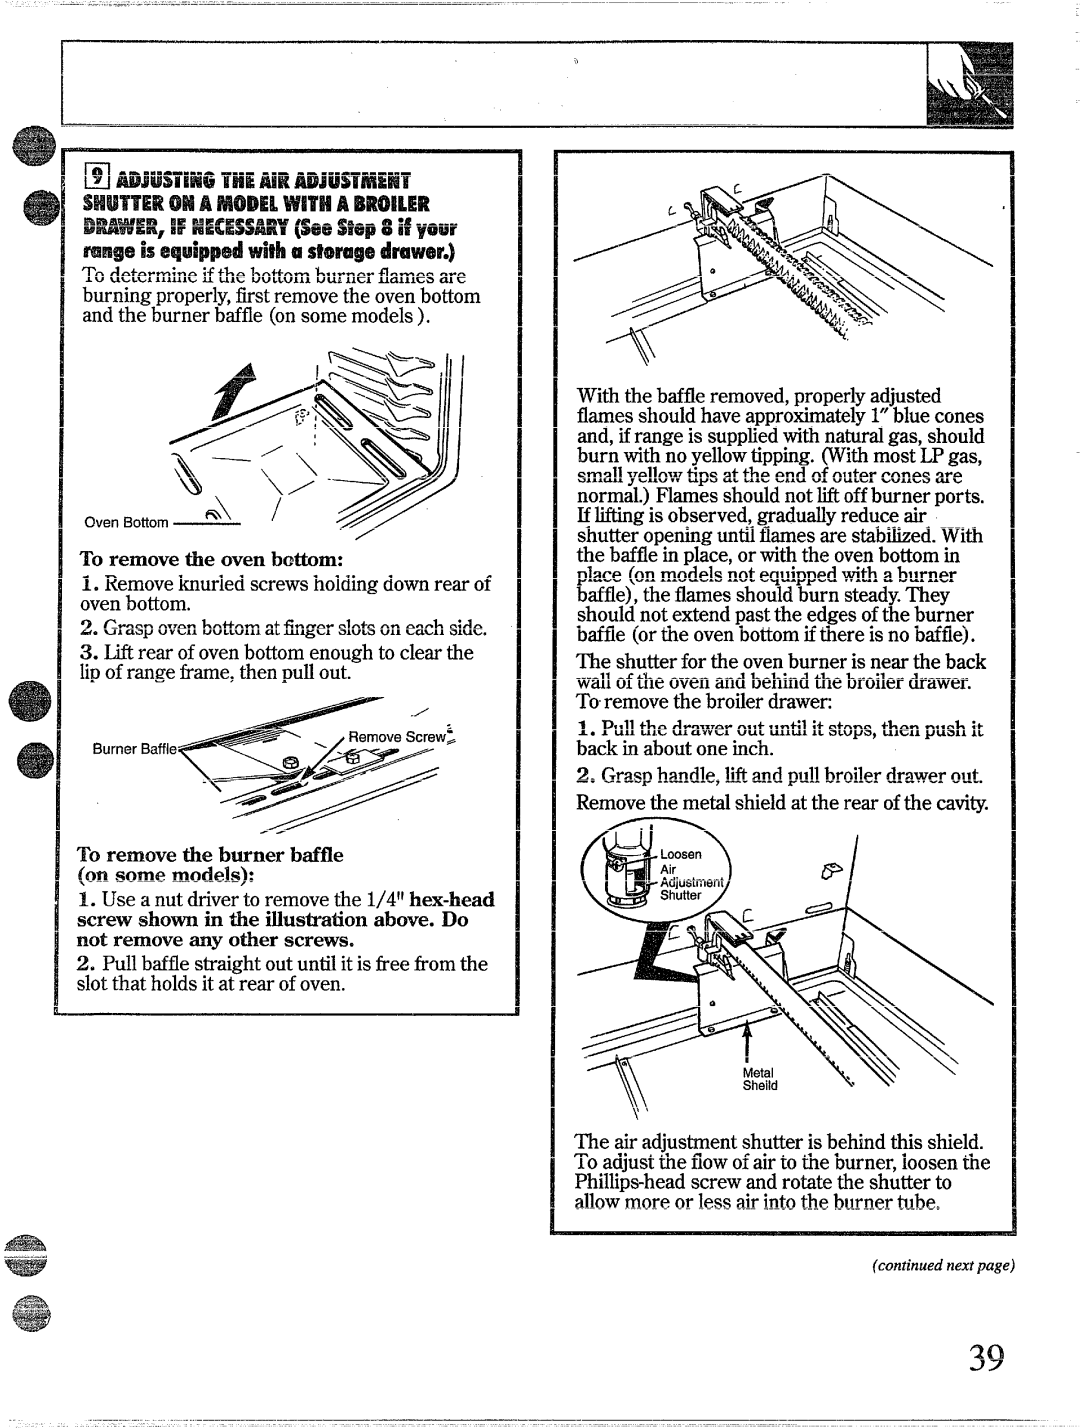 GE 49-8338 installation instructions Toremovetie ovenbottom 